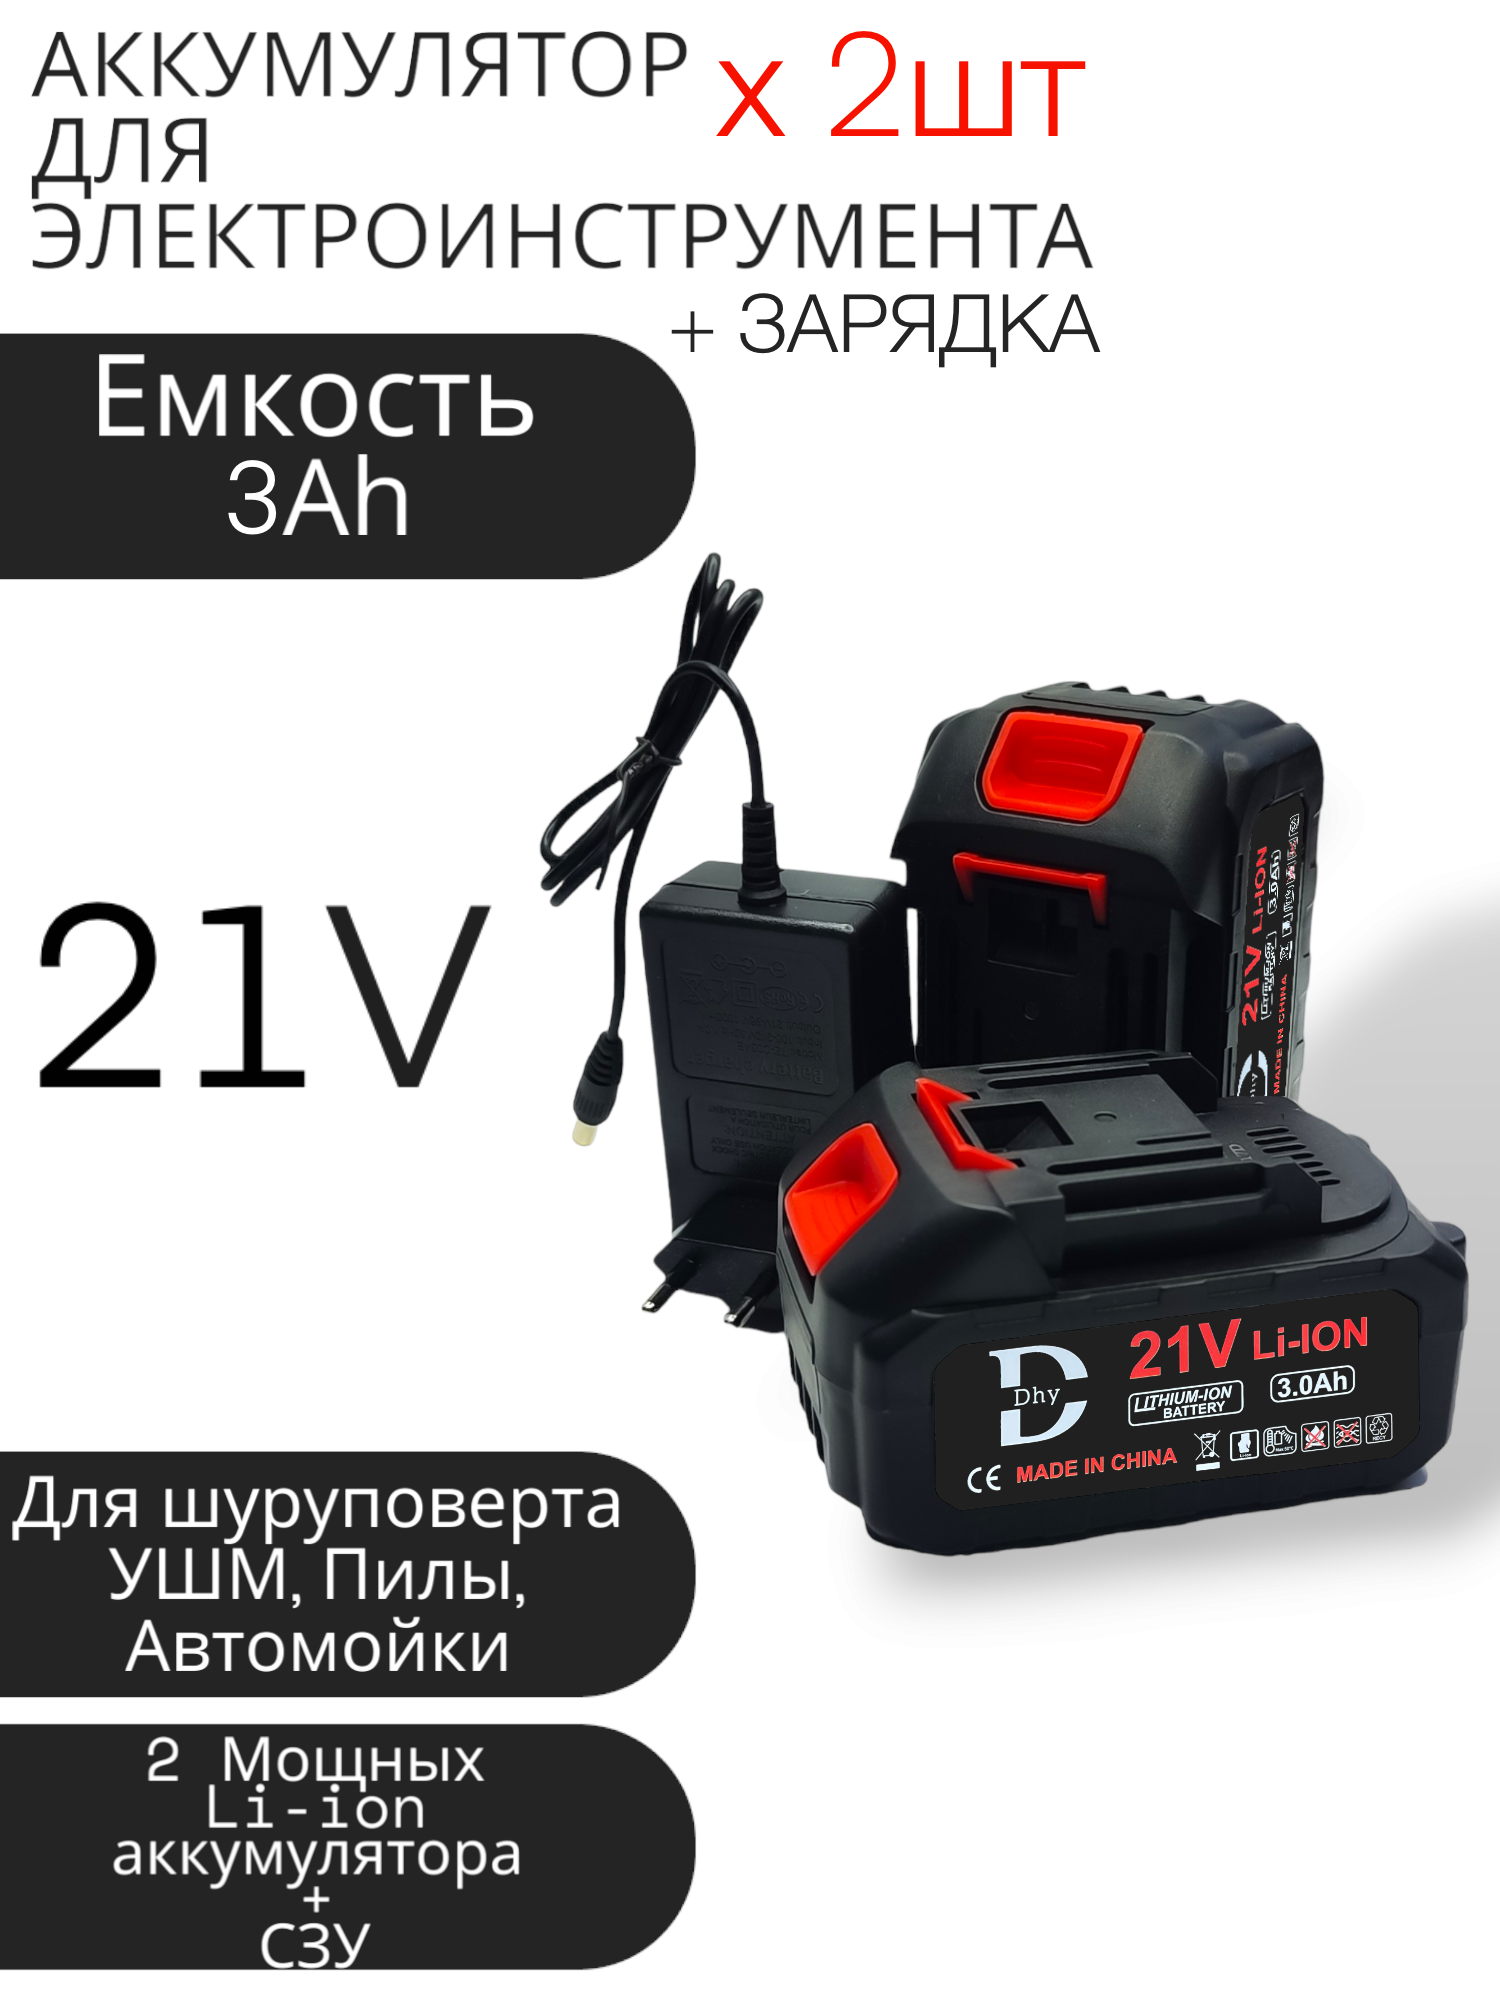 Аккумулятор для электроинструмента - 2 шт + зарядка (электропила, ушм, шуруповерт, болгарка, гайковерт, триммер, воздуходувка, газонокосилка)